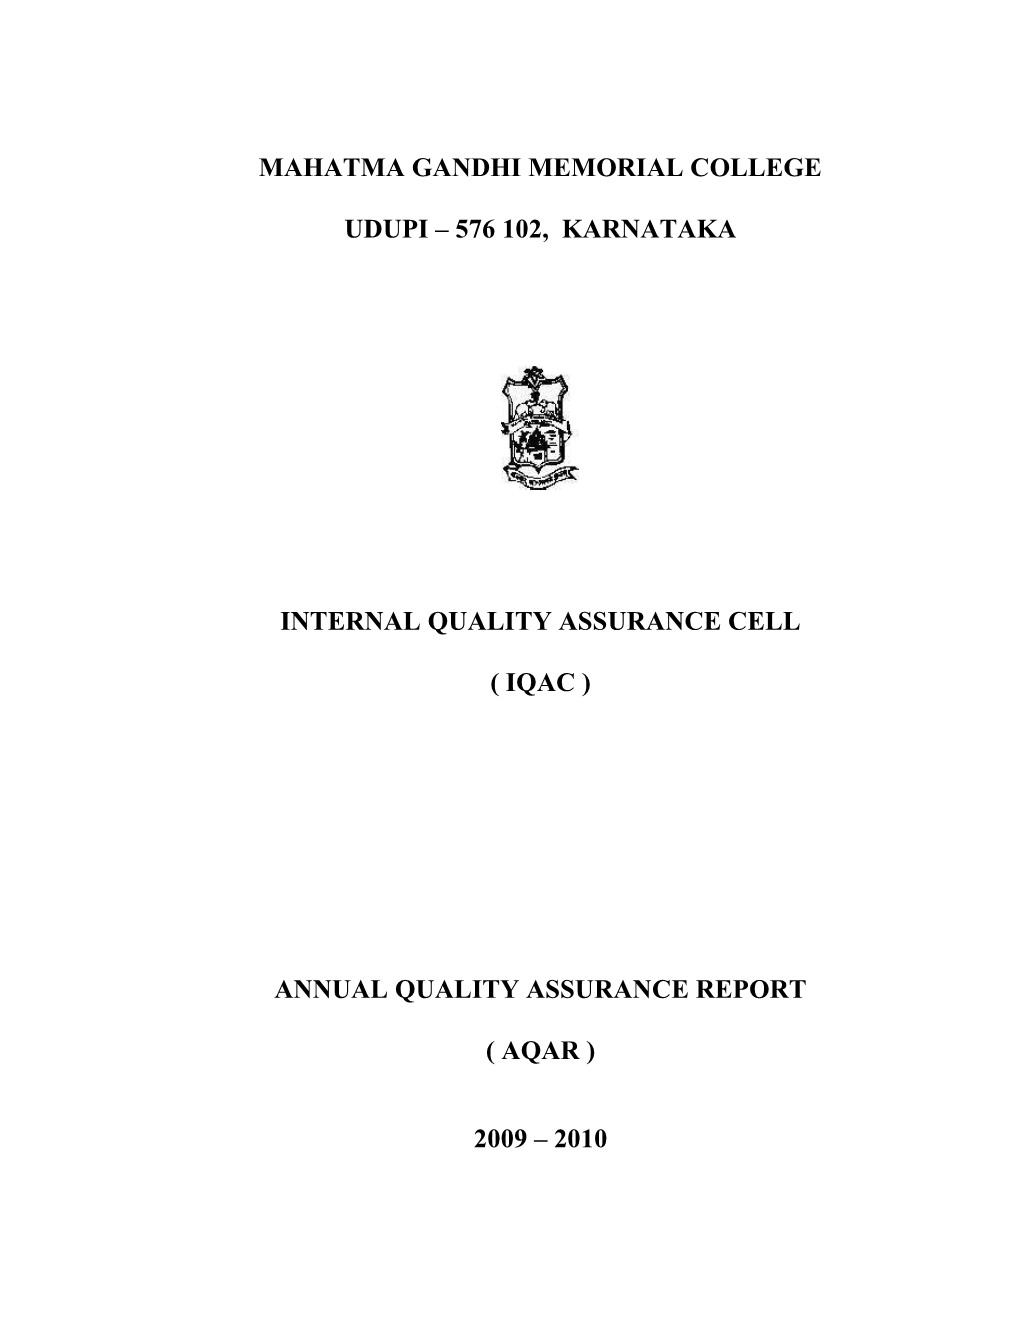 Download IQAC Reports 2009-10